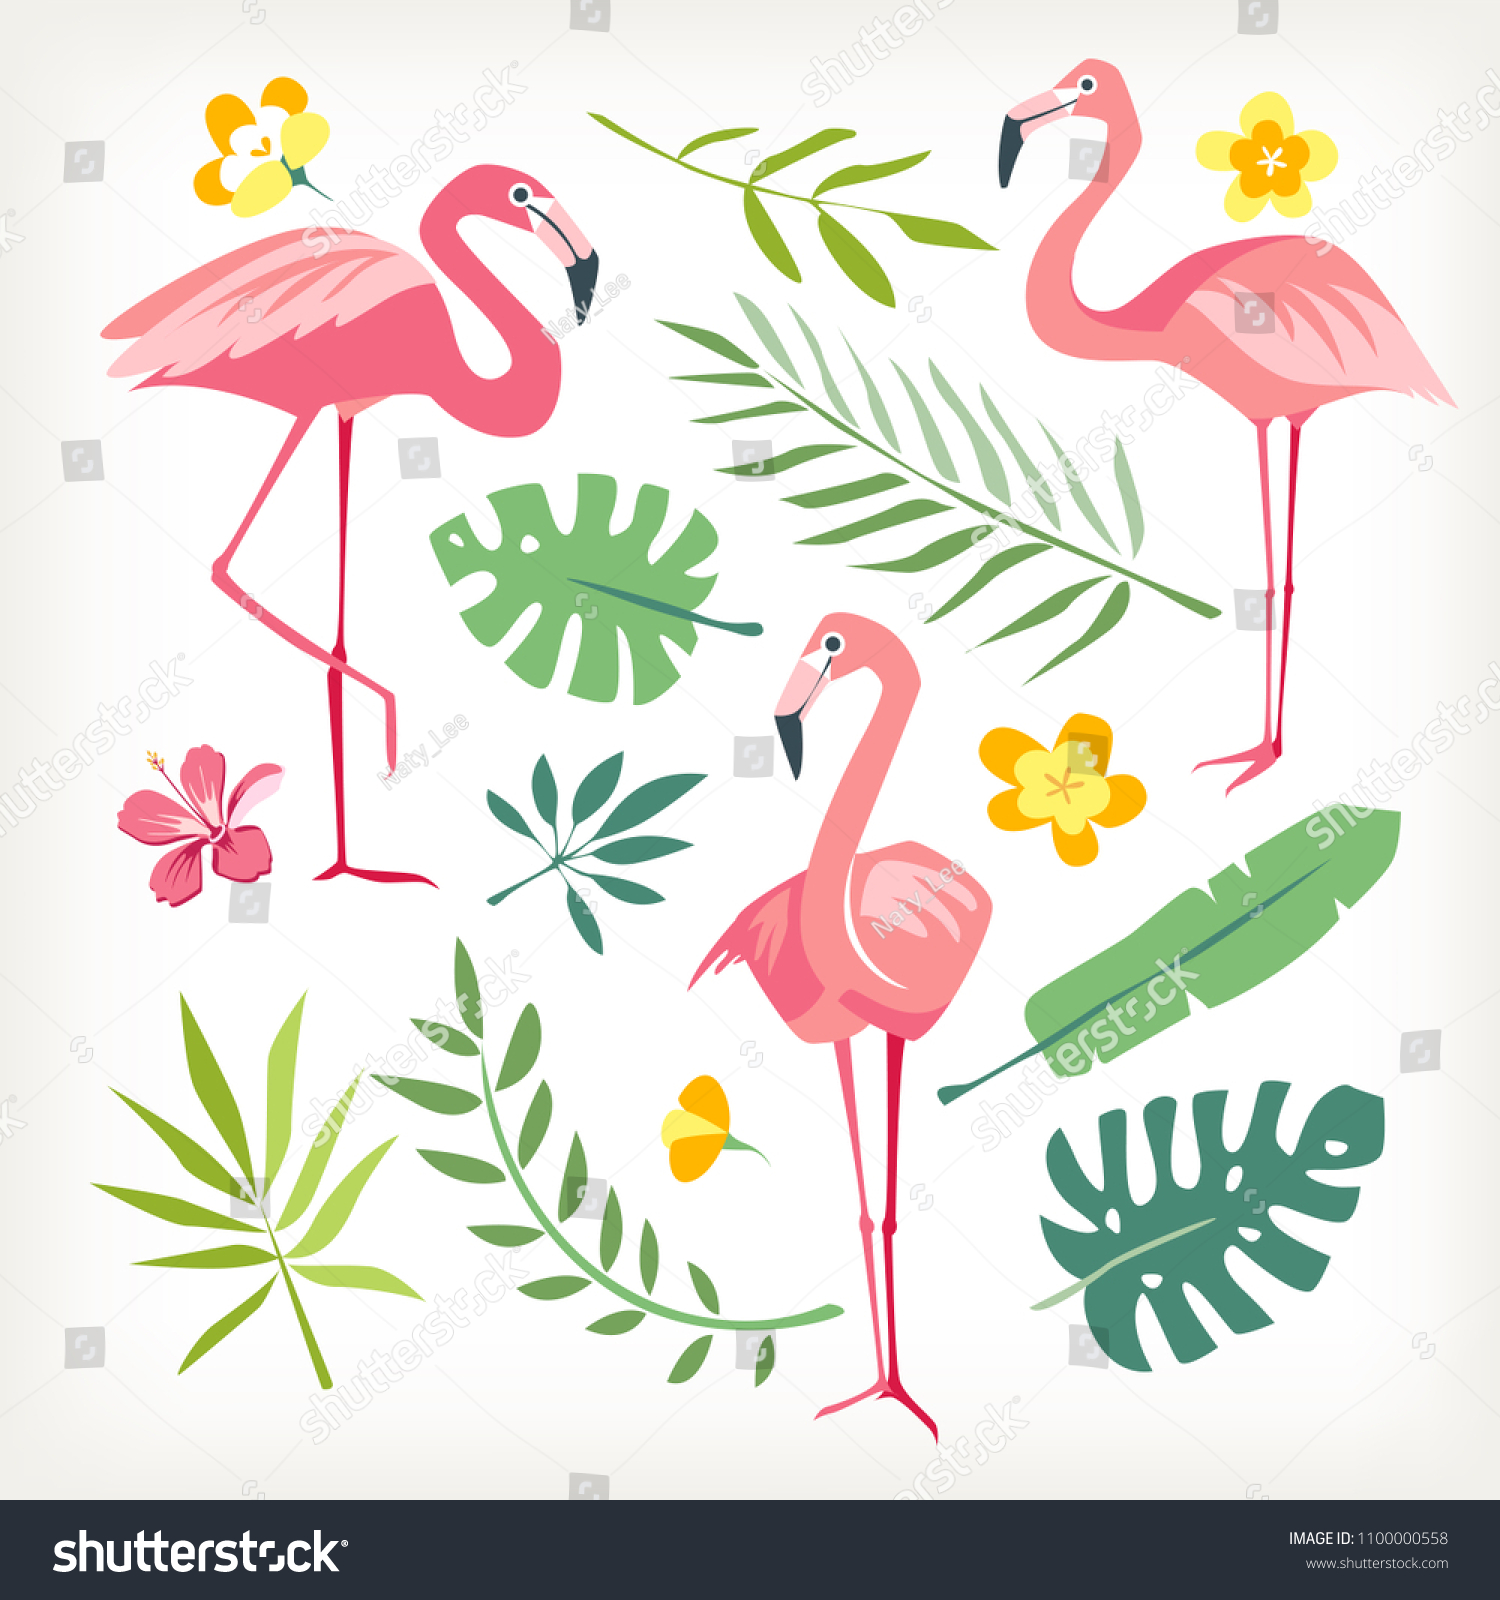 1 Tropicl Birds Background Images, Stock Photos & Vectors | Shutterstock